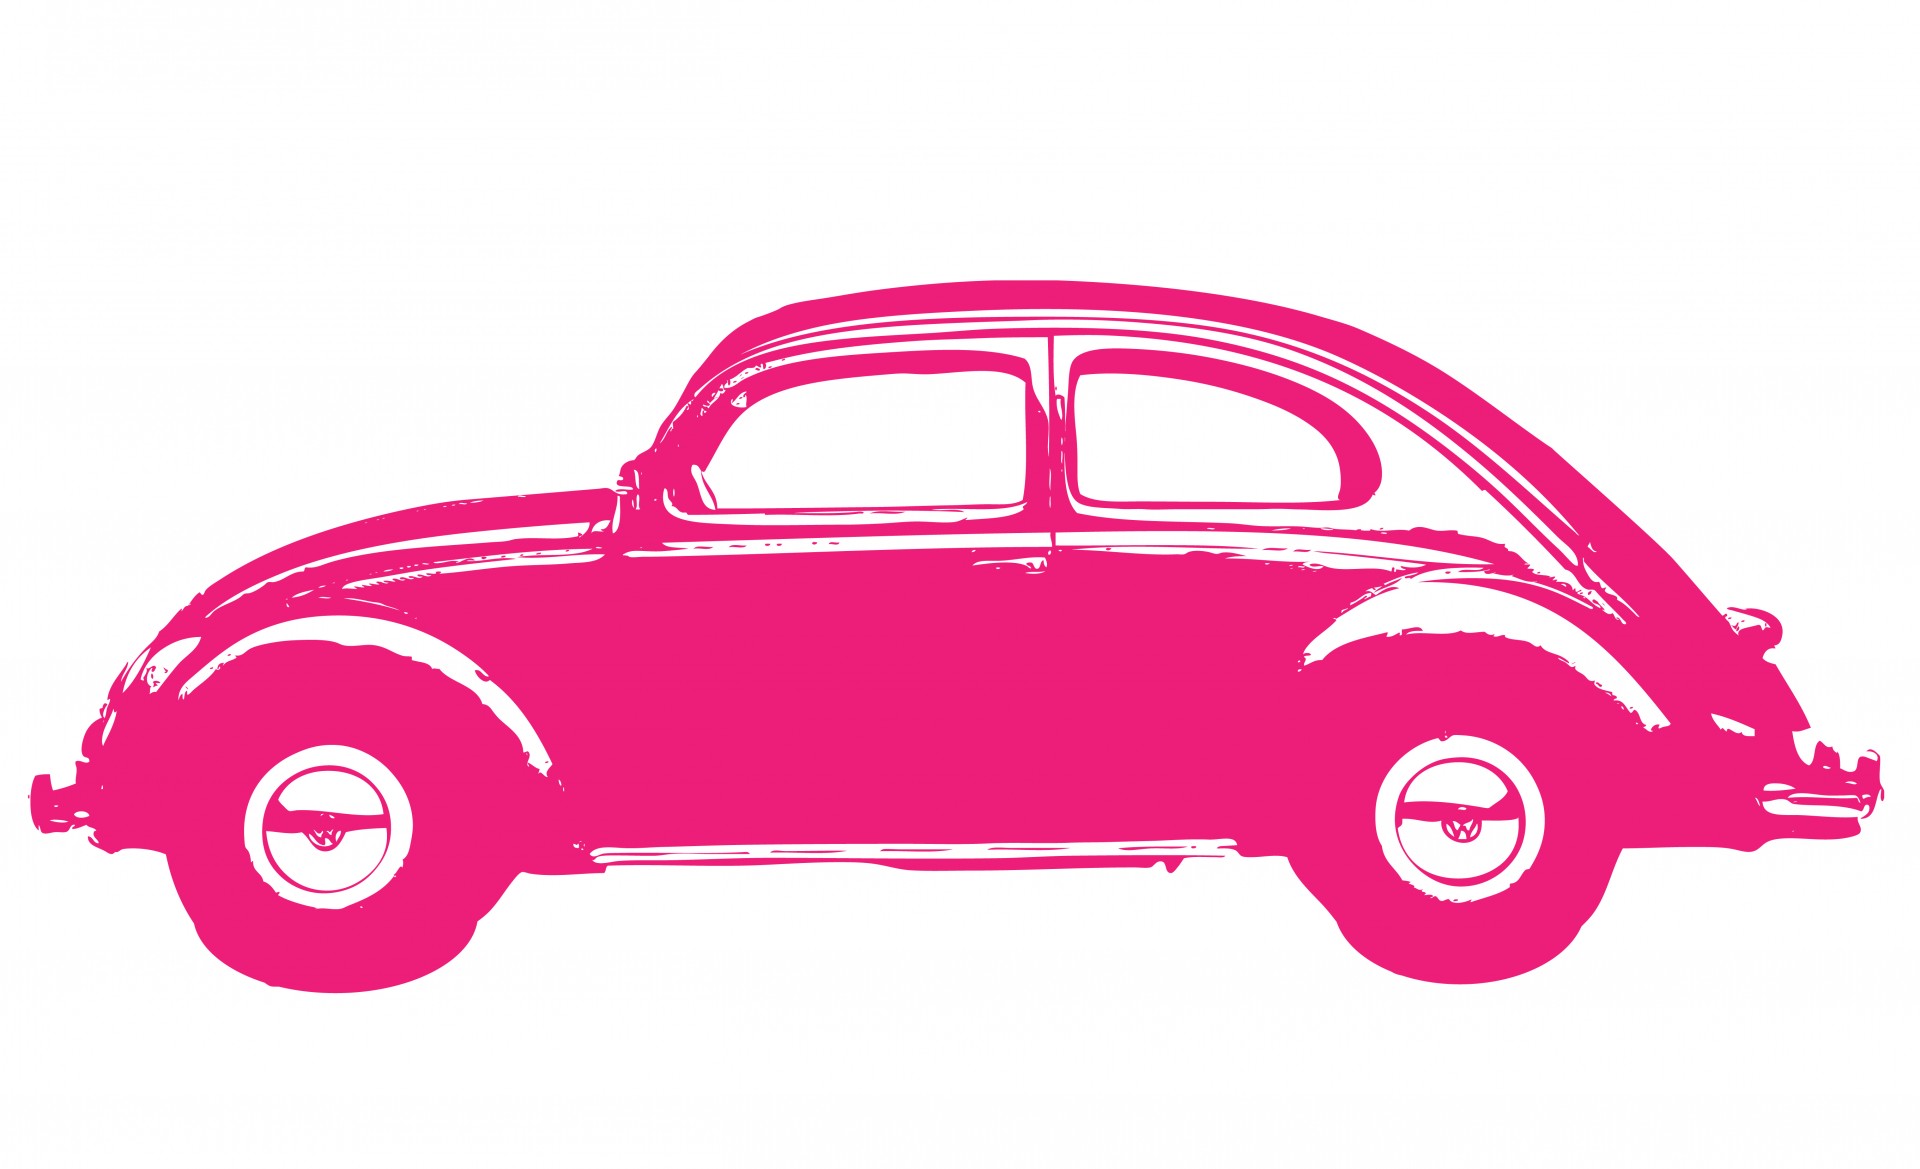 Beautiful vintage volkswagen beetle car in pink clipart for scrapbooking